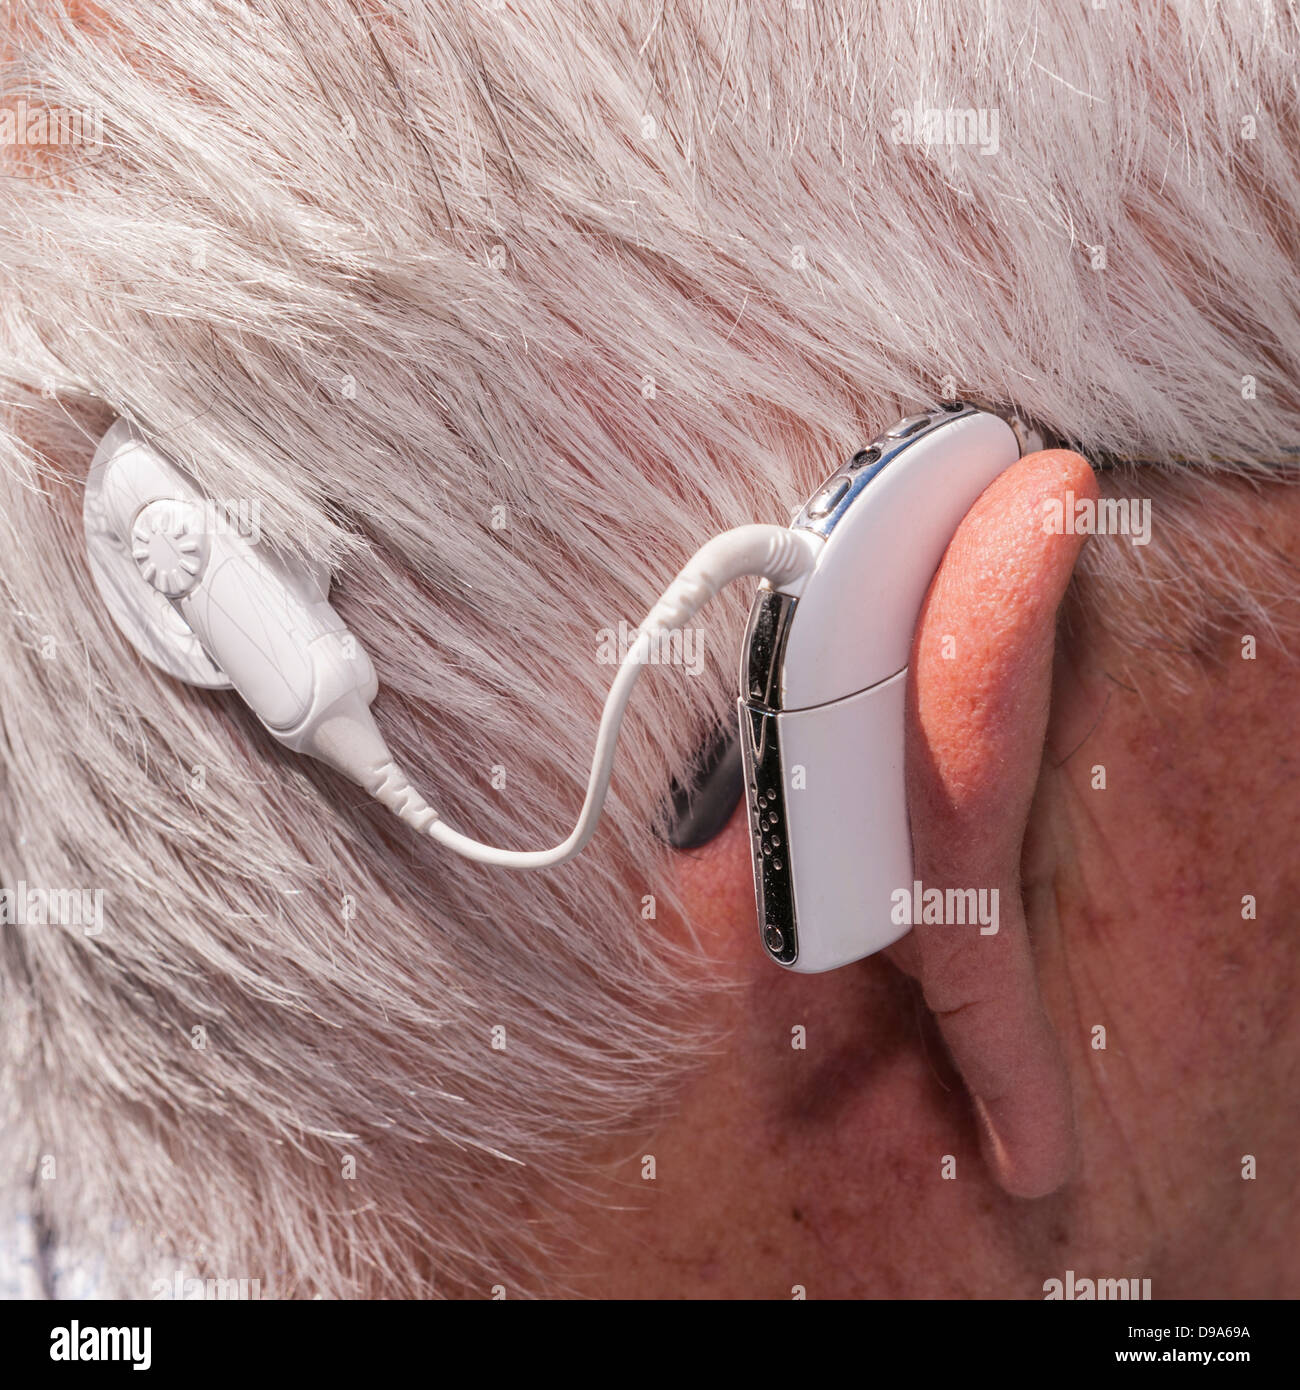 Usando un audífono de implante coclear fotografías e imágenes de alta  resolución - Alamy